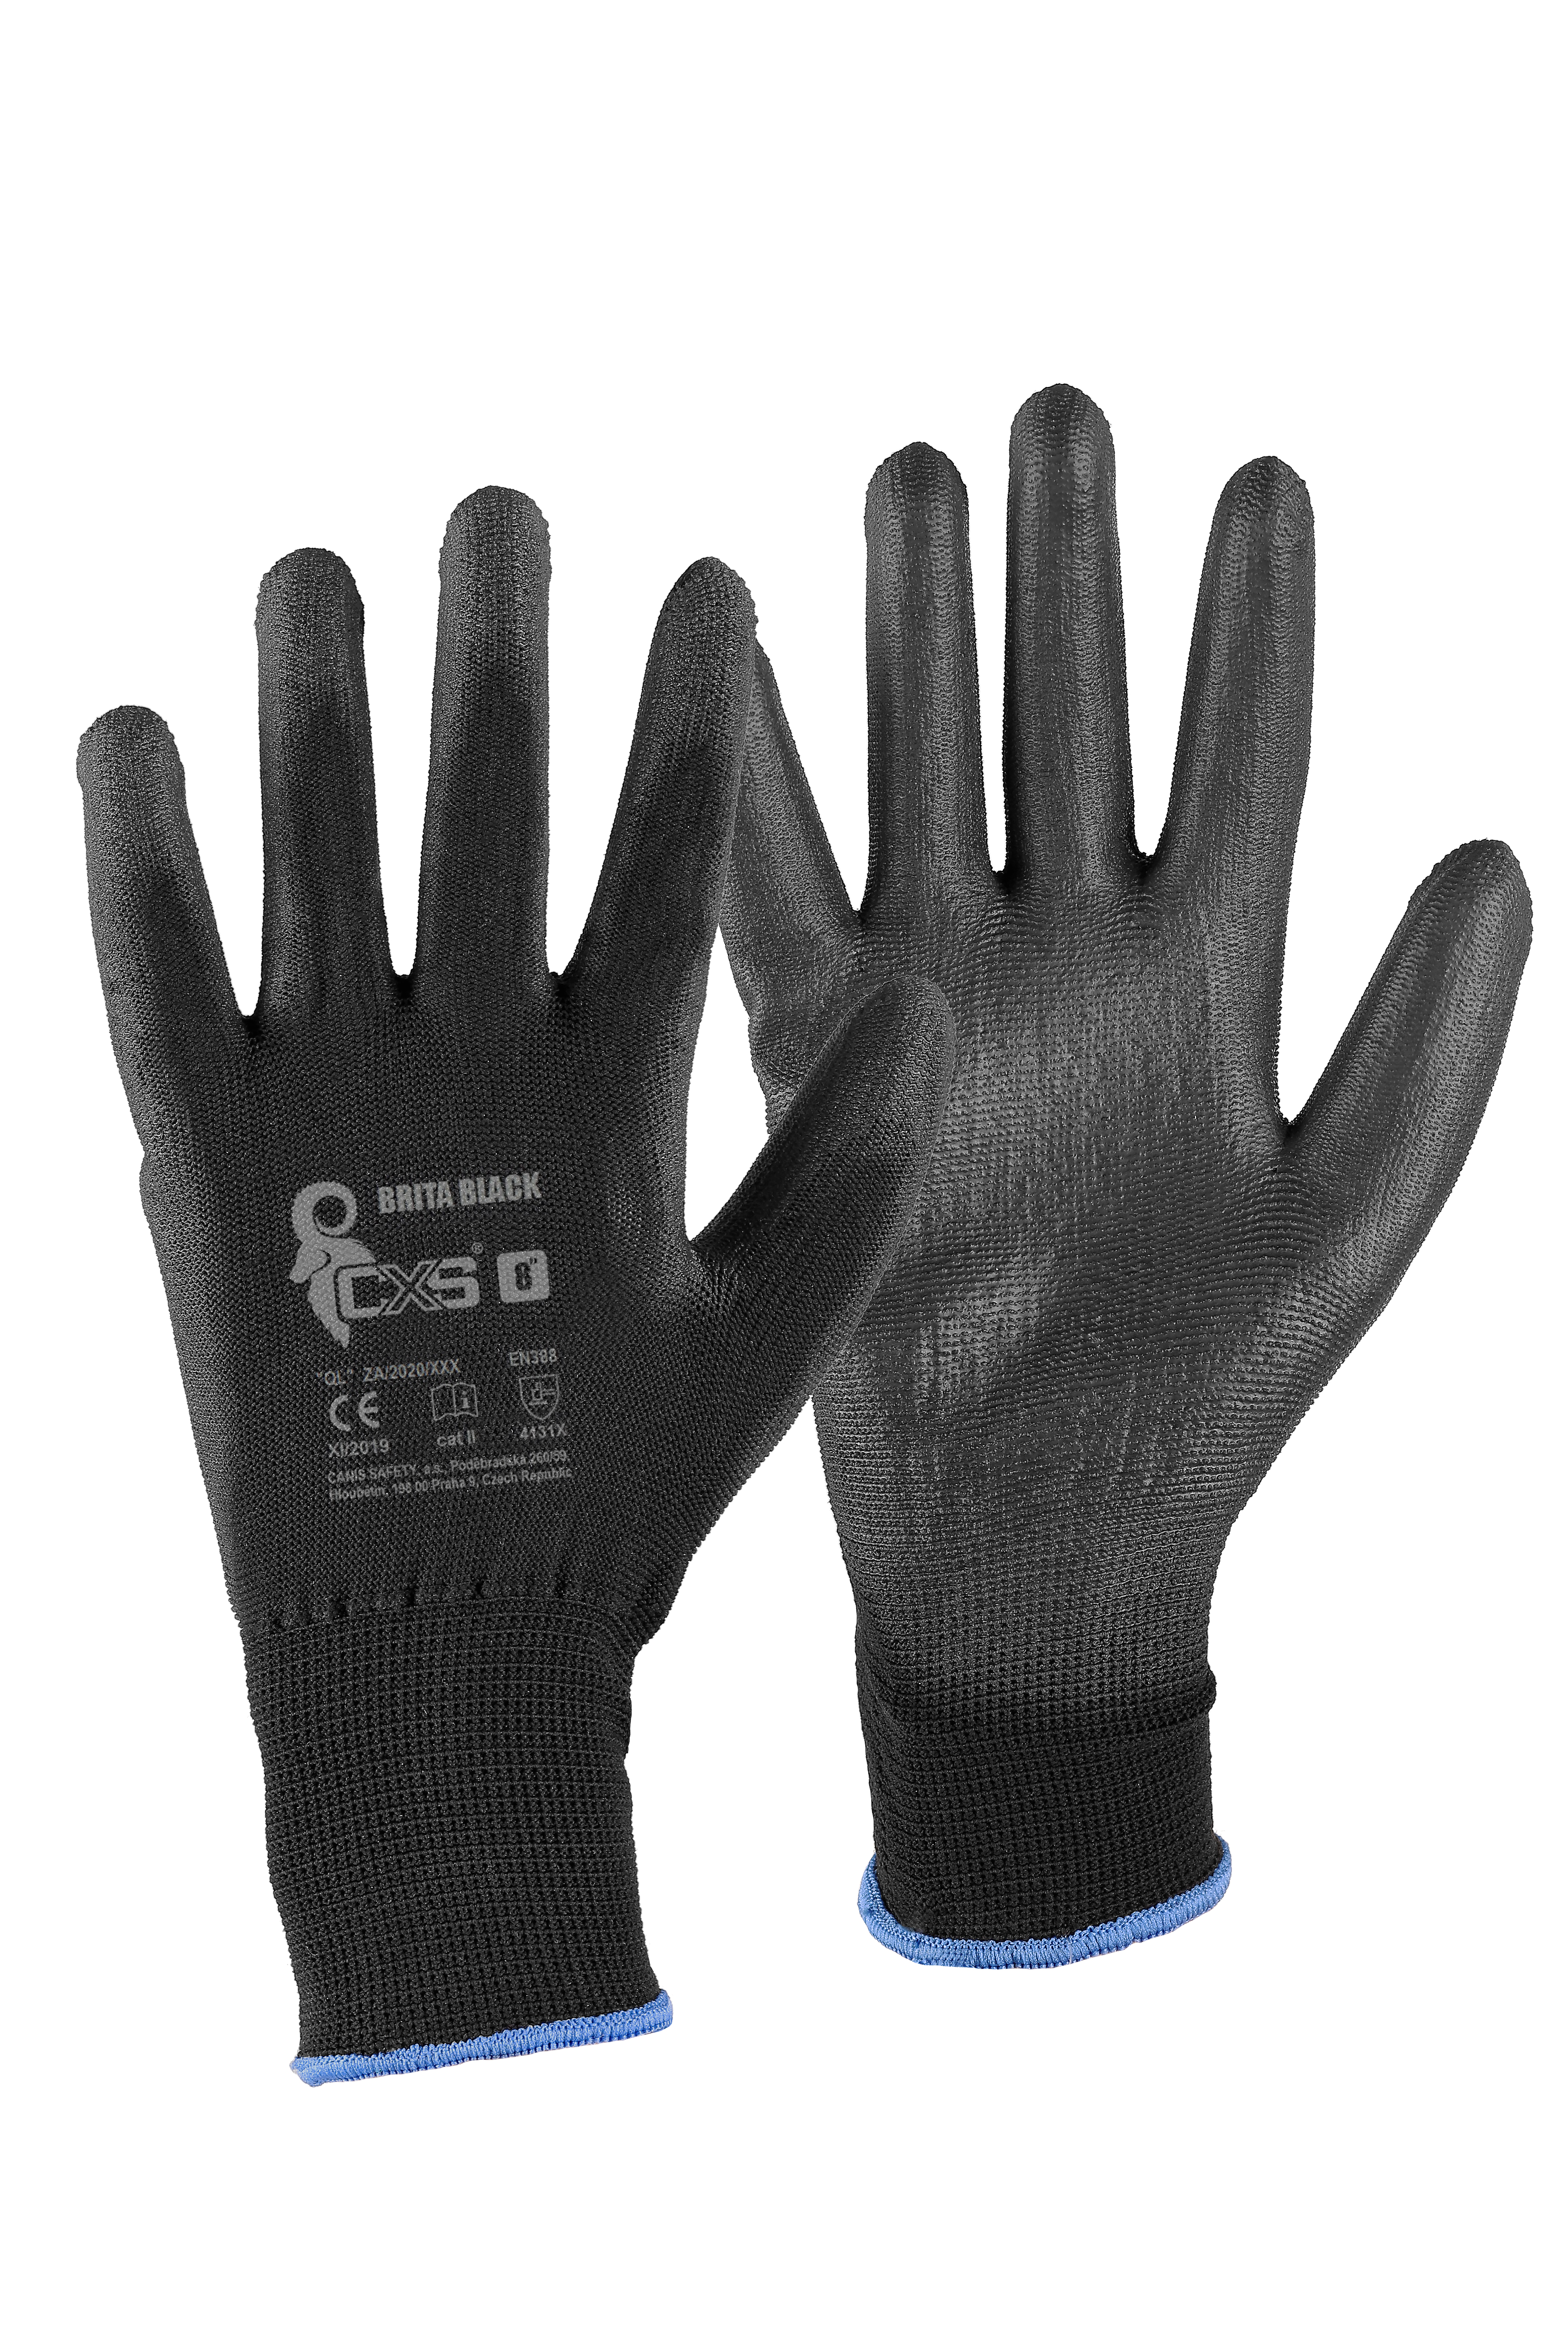 rukavice BRITA BLACK, s PU dlaní a úpletem, velikost 8 0.02 Kg TOP Sklad4 606047 289